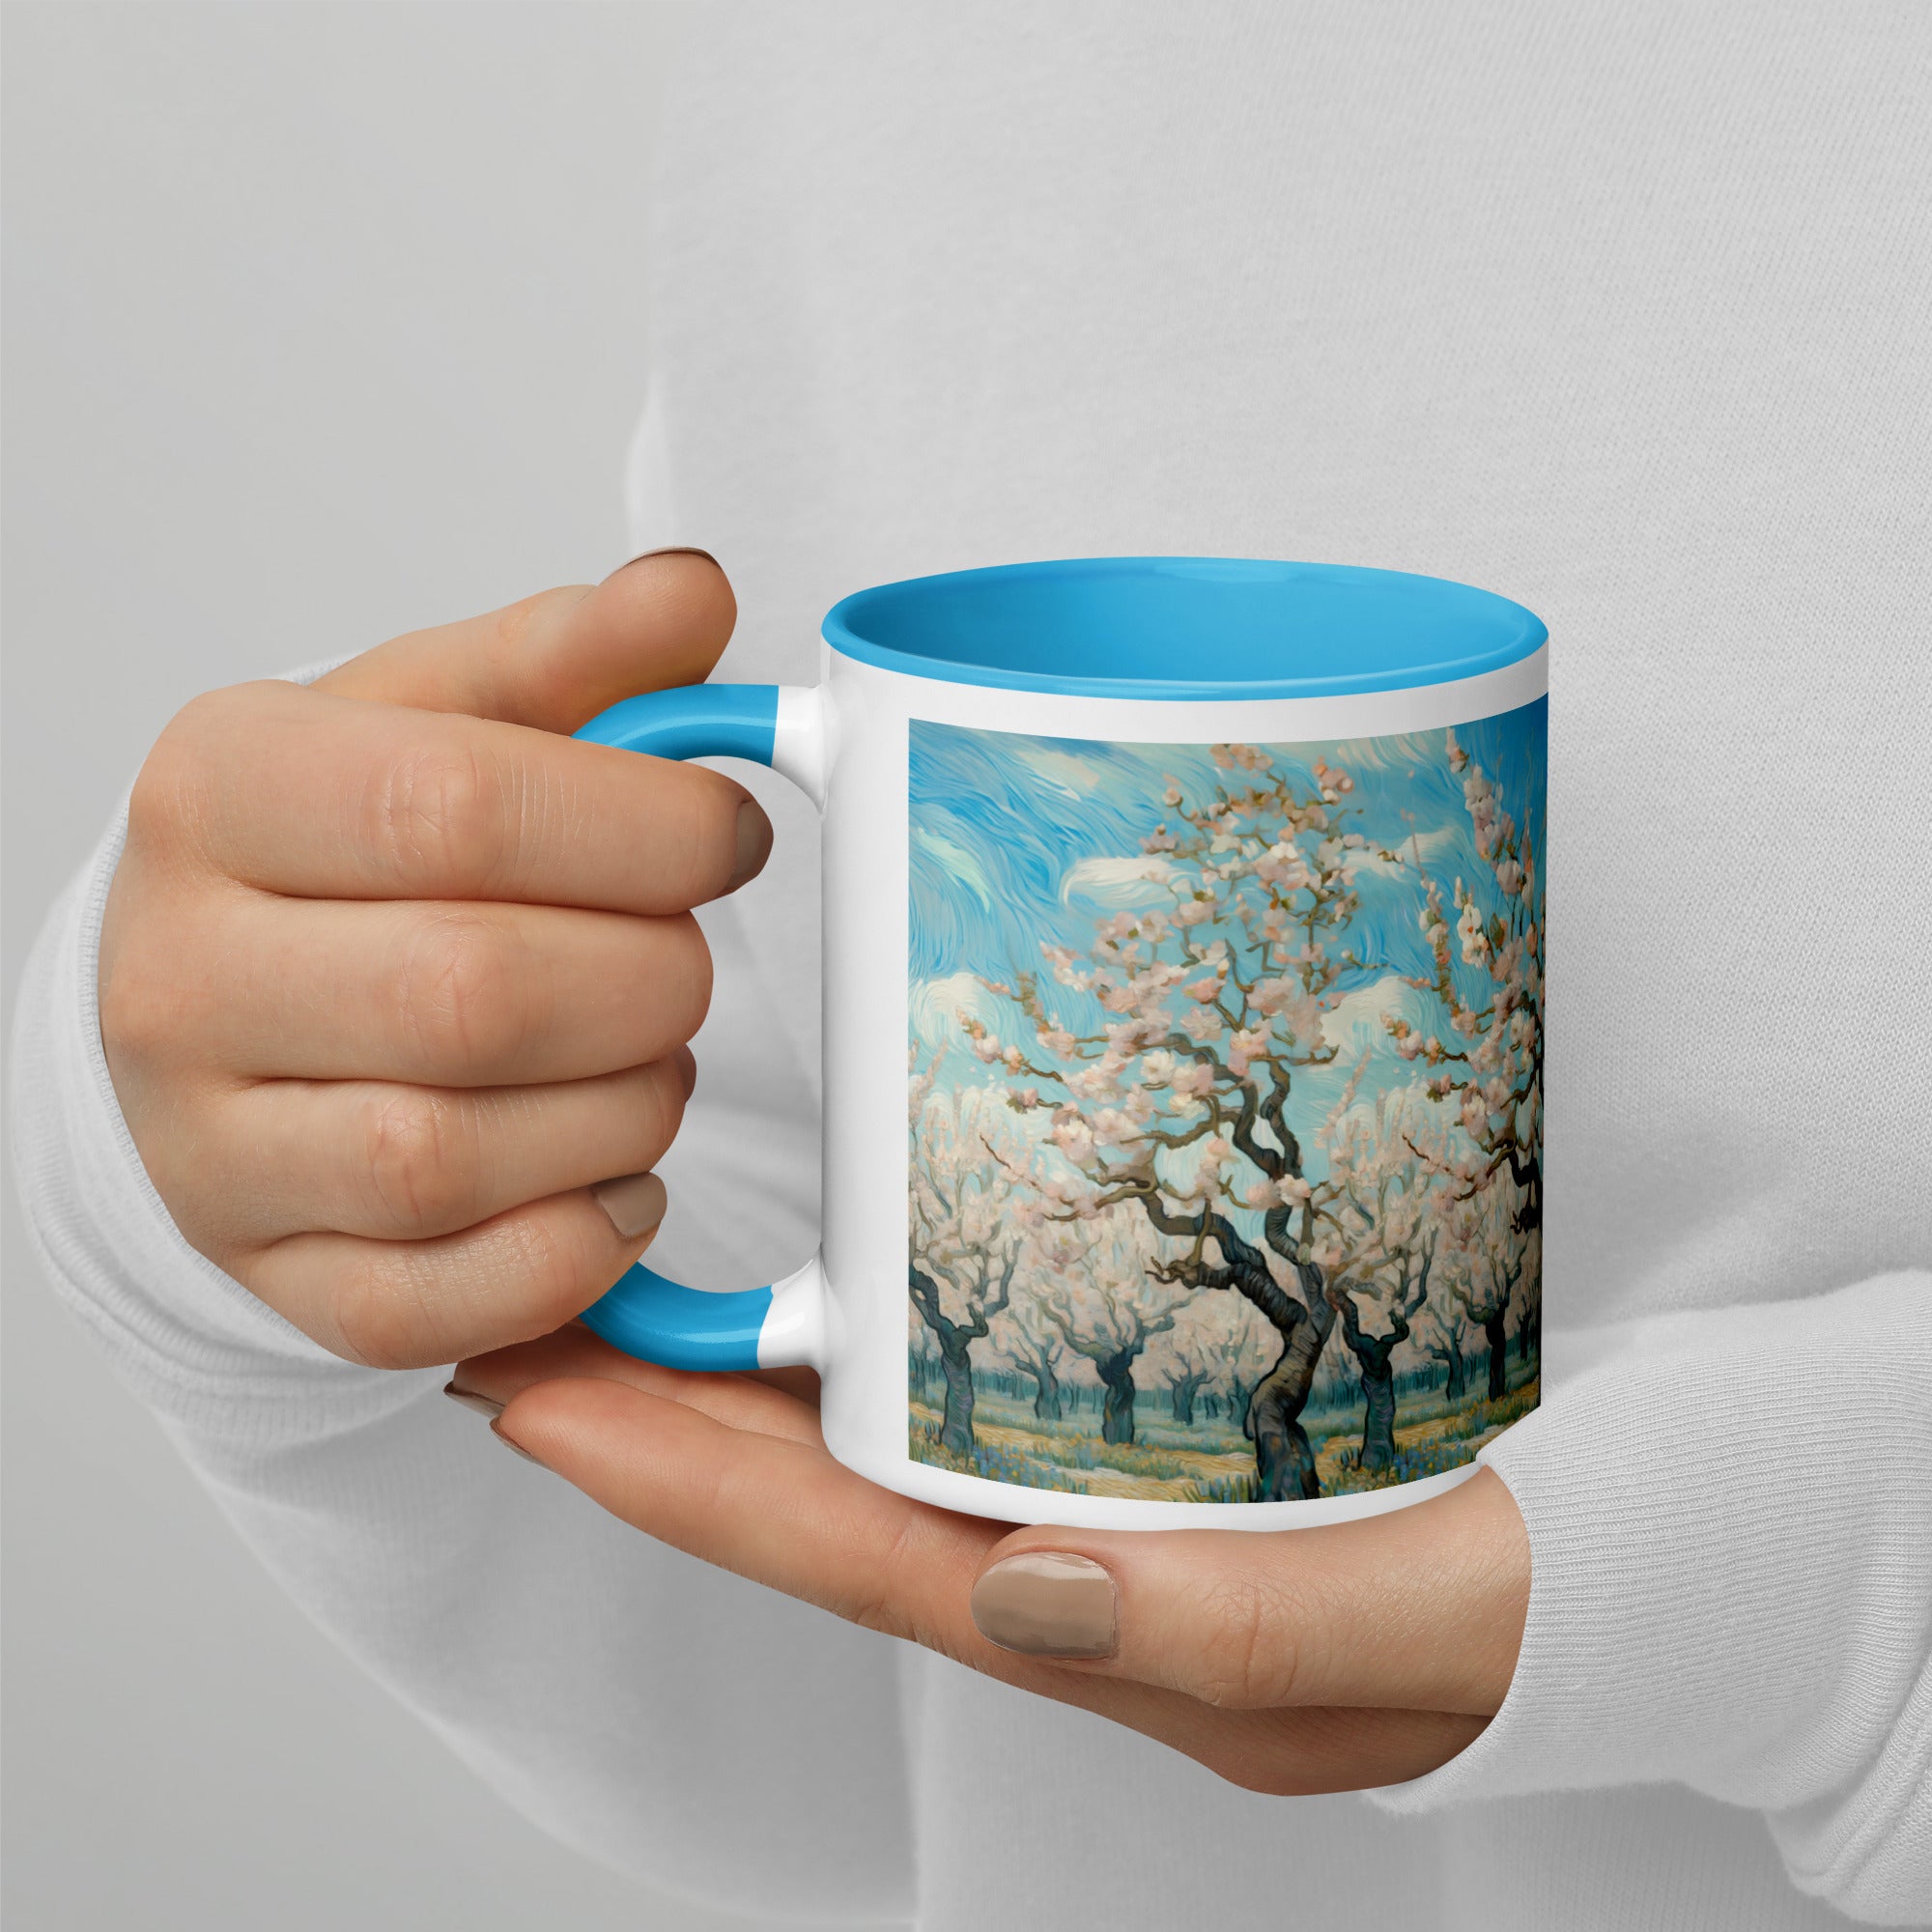 Vincent van Gogh 'Orchard in Blossom' Famous Painting Ceramic Mug | Premium Art Mug